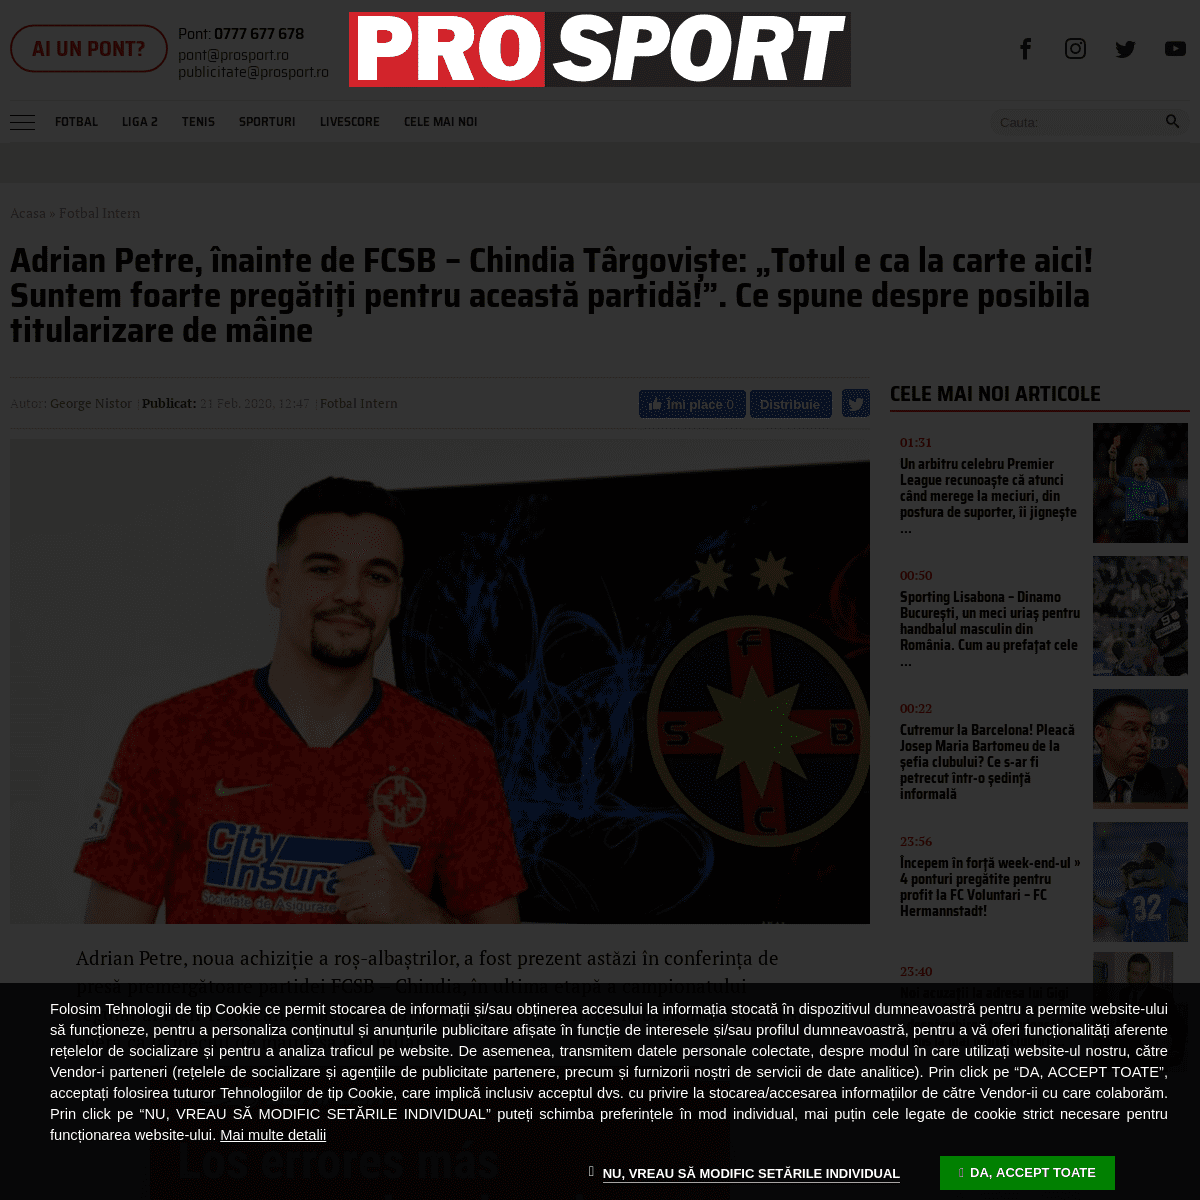 A complete backup of www.prosport.ro/fotbal-intern/adrian-petre-inainte-de-fcsb-chindia-targoviste-totul-e-ca-la-carte-aici-sunt